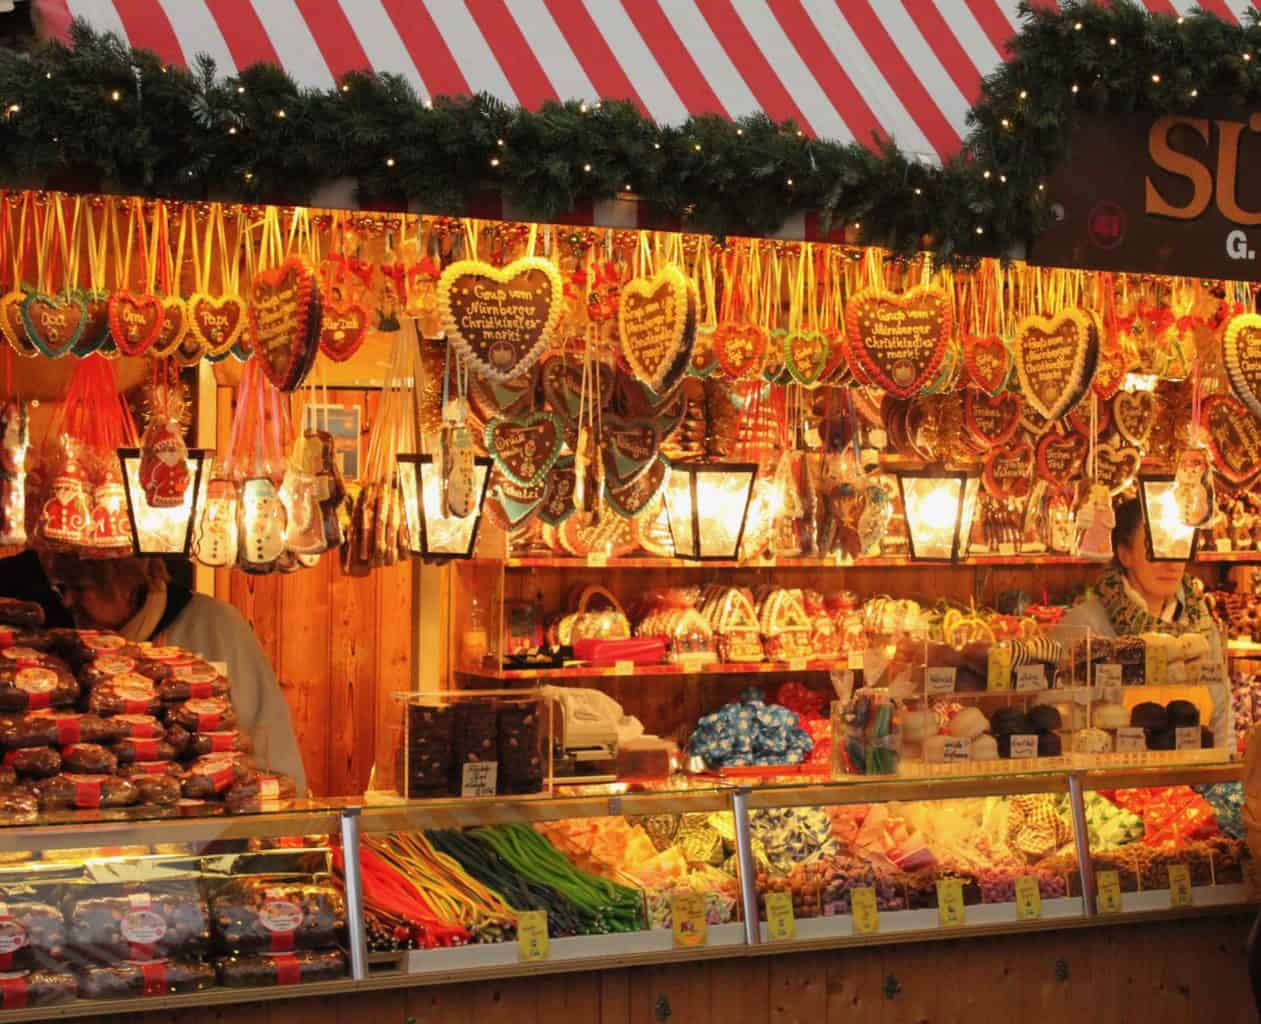 Christmas markets in Nuremberg